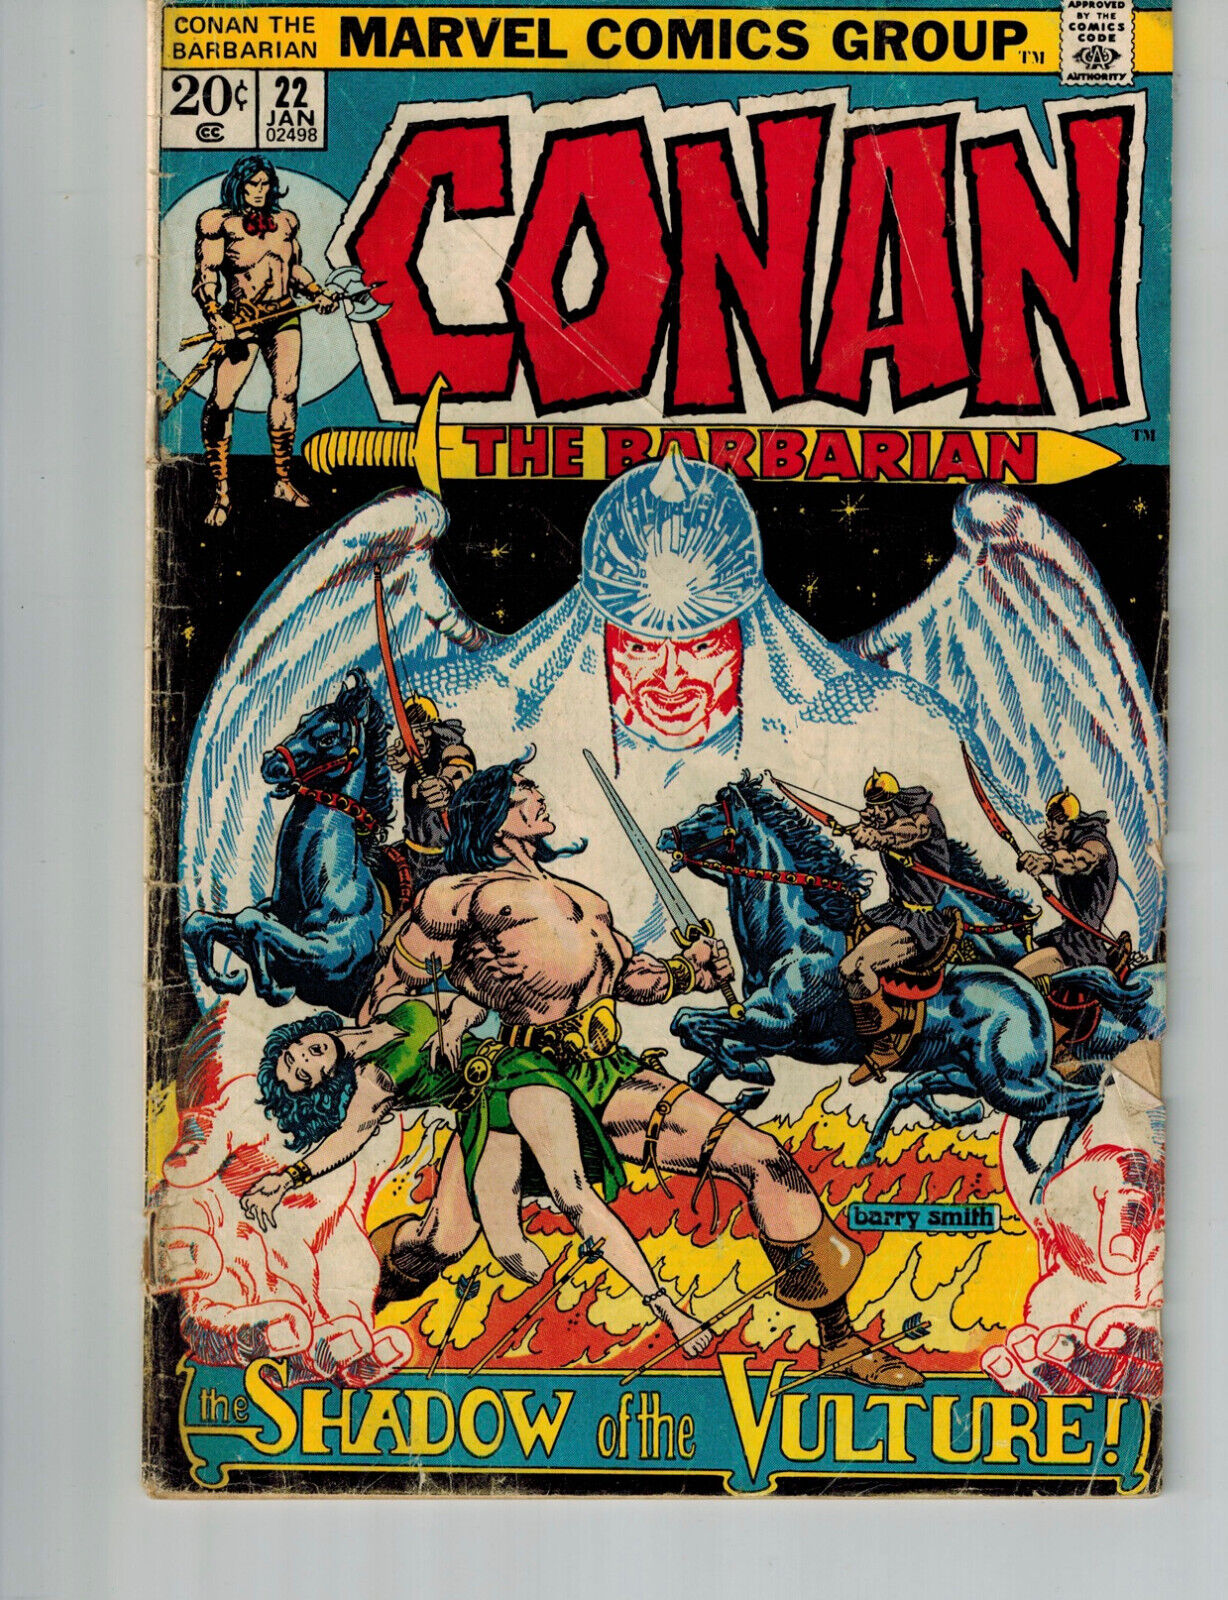 CONAN THE BARBARIAN #22 (1972) Marvel Comics Barry Smith Art